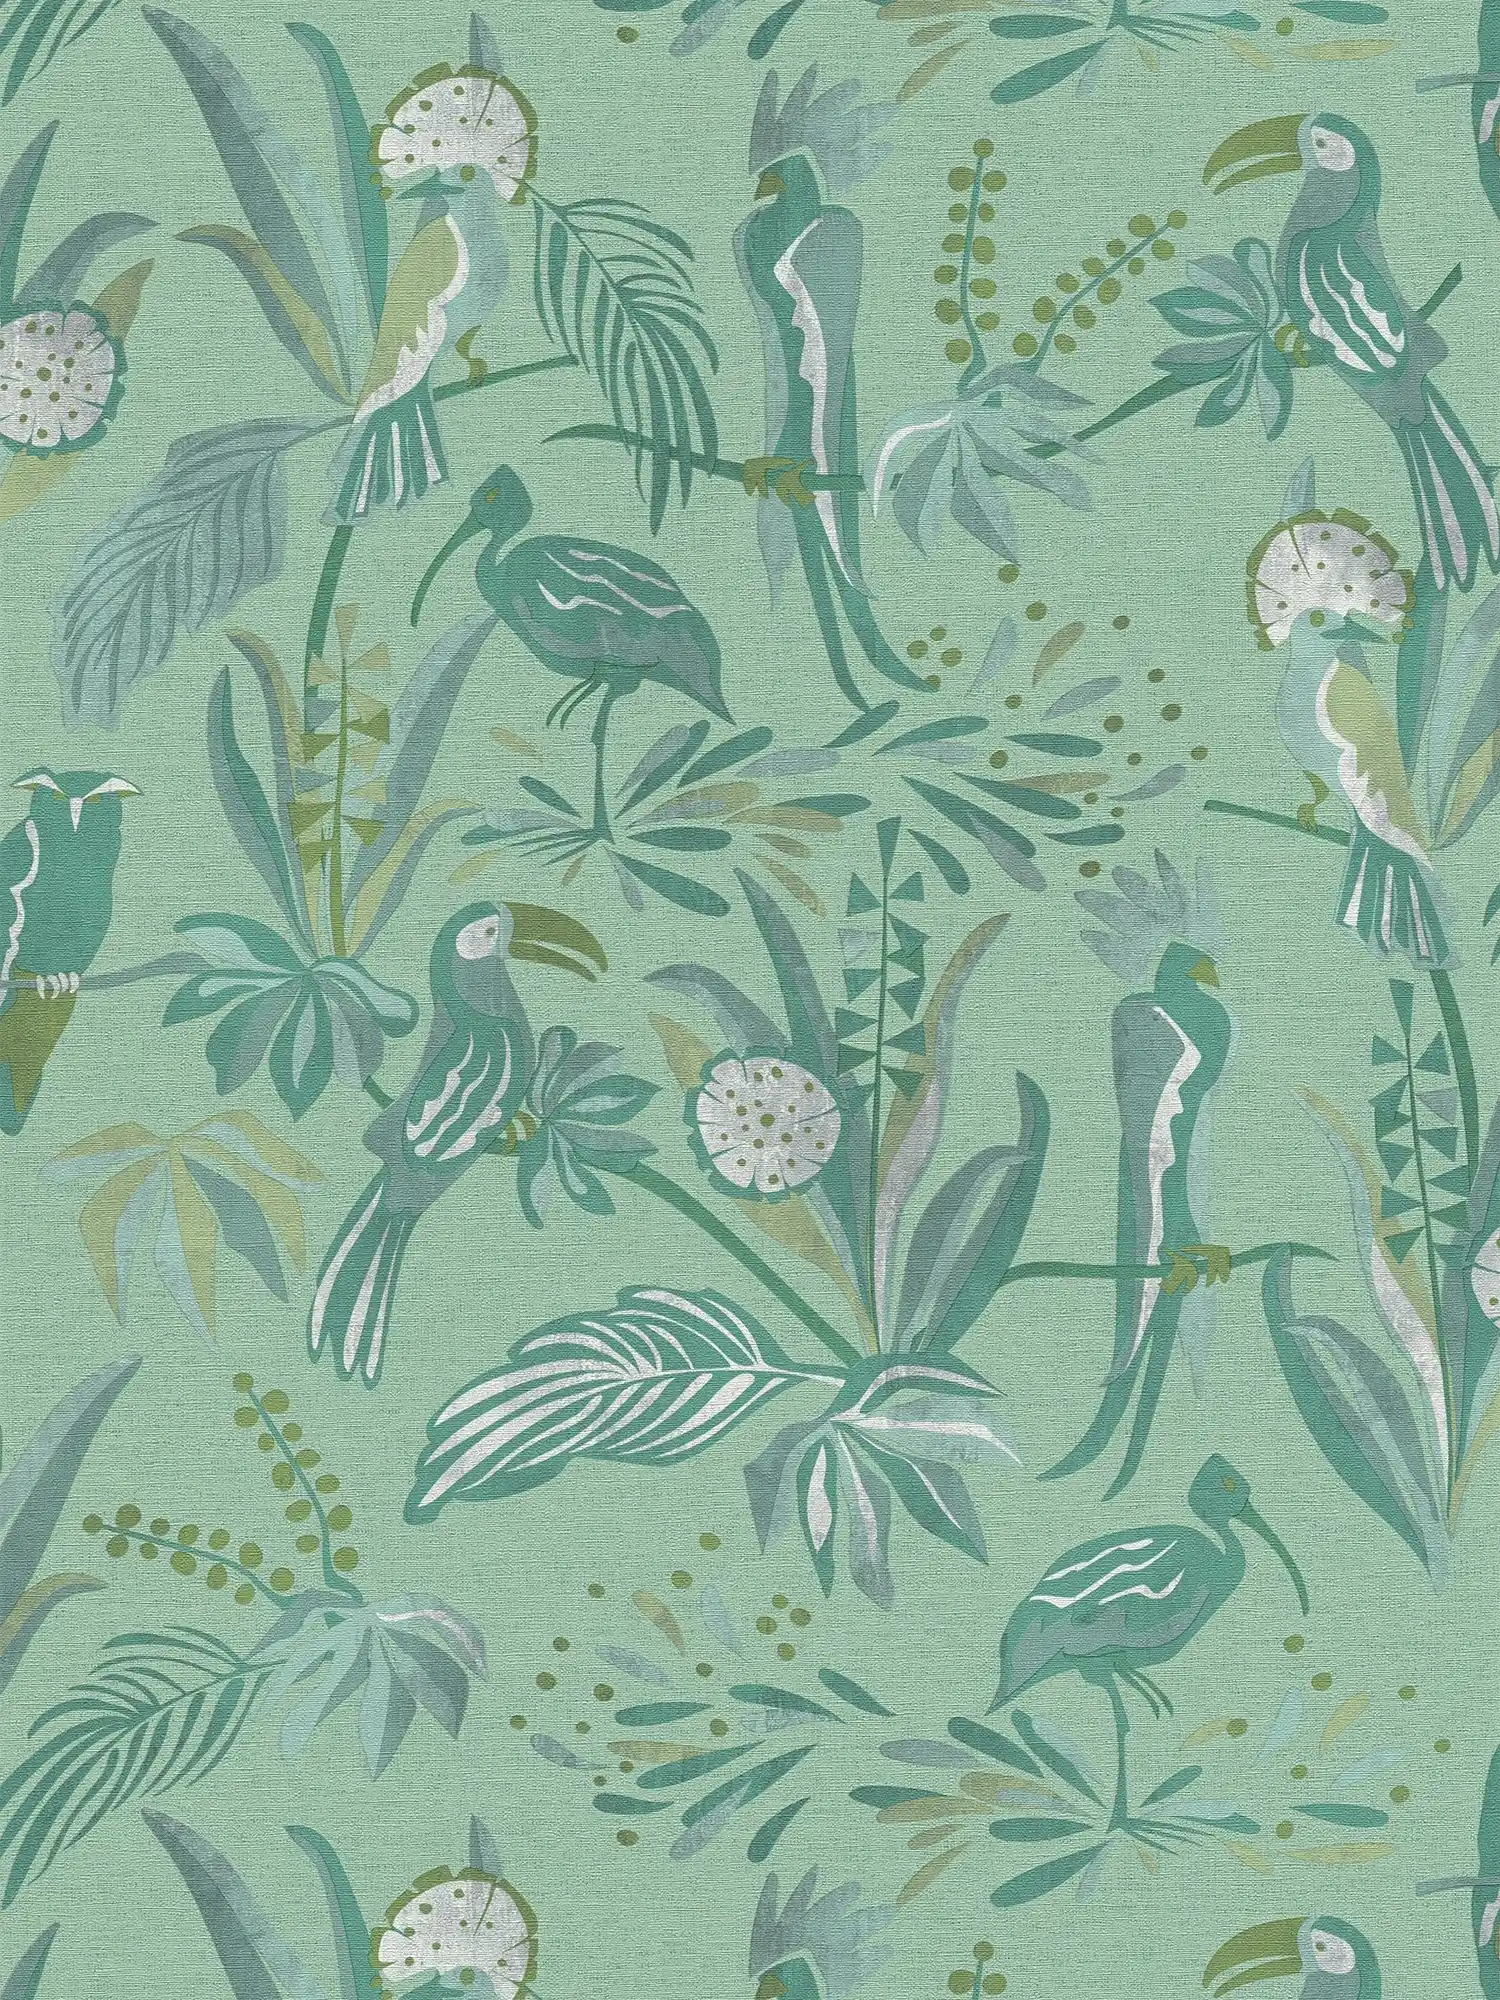 Vliestapete mit Dschungelmotiv Blätter & Vögel – Grün, Grau
